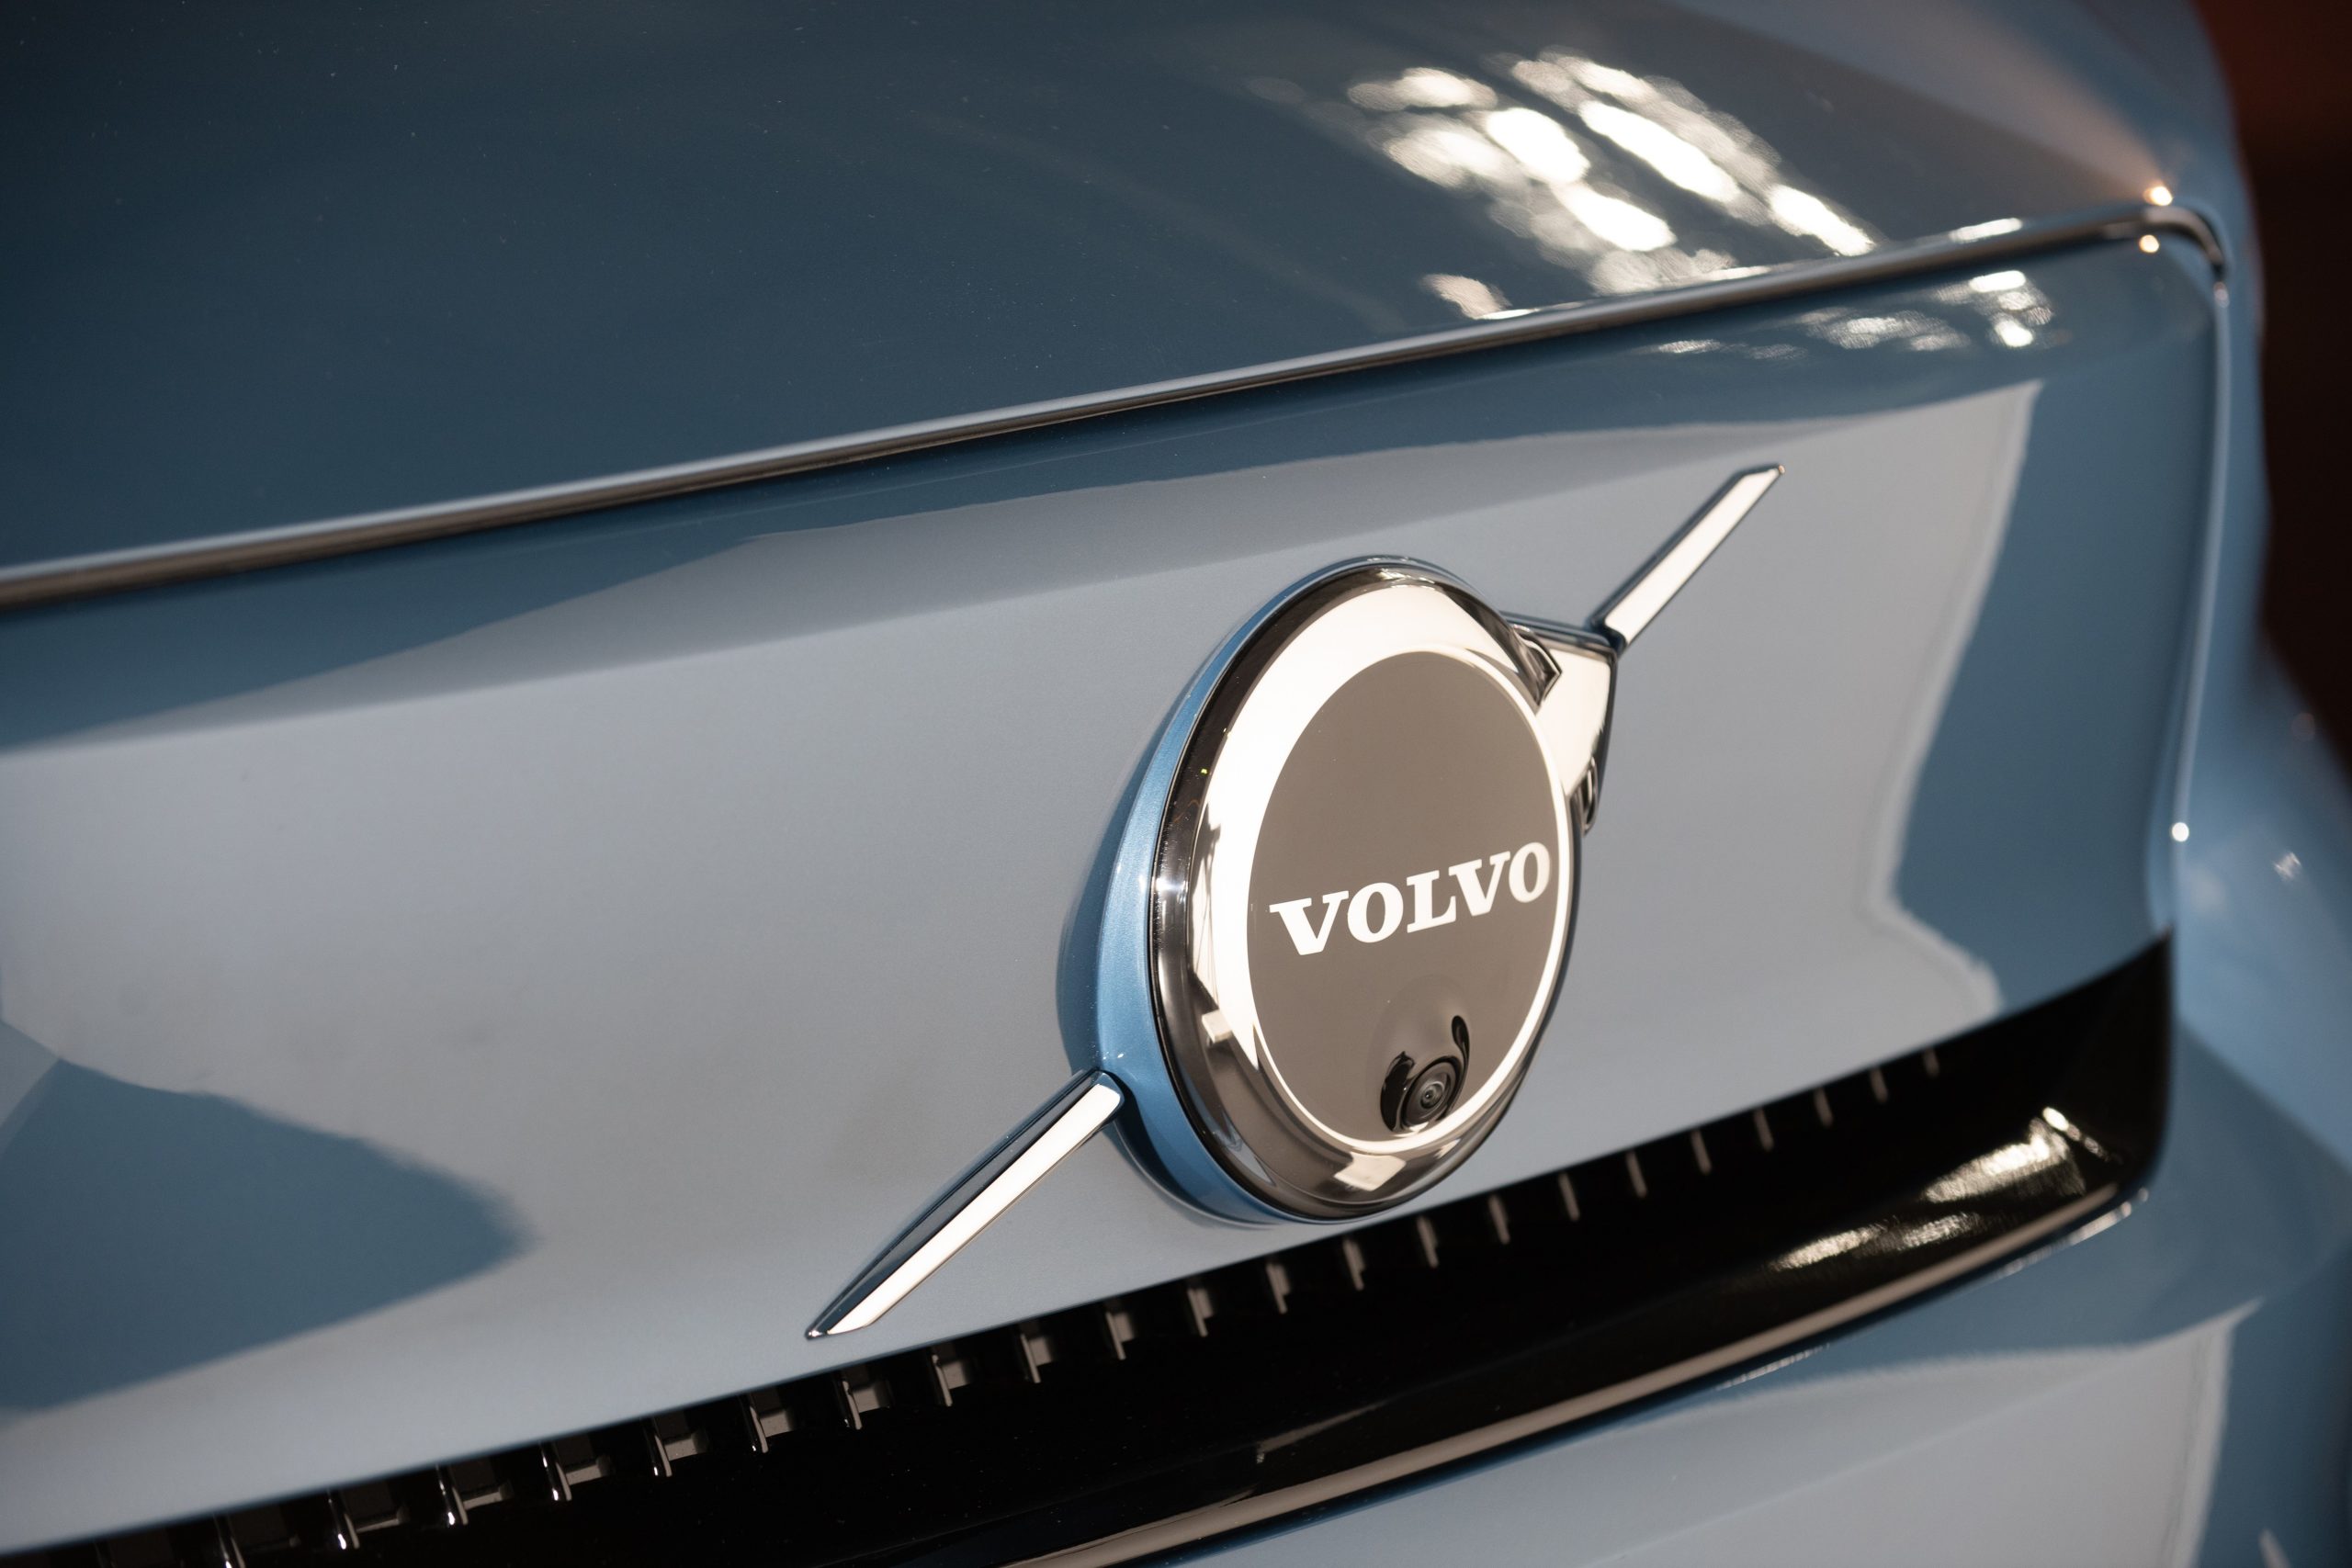 Volvo revises IPO valuation down to two billion euros